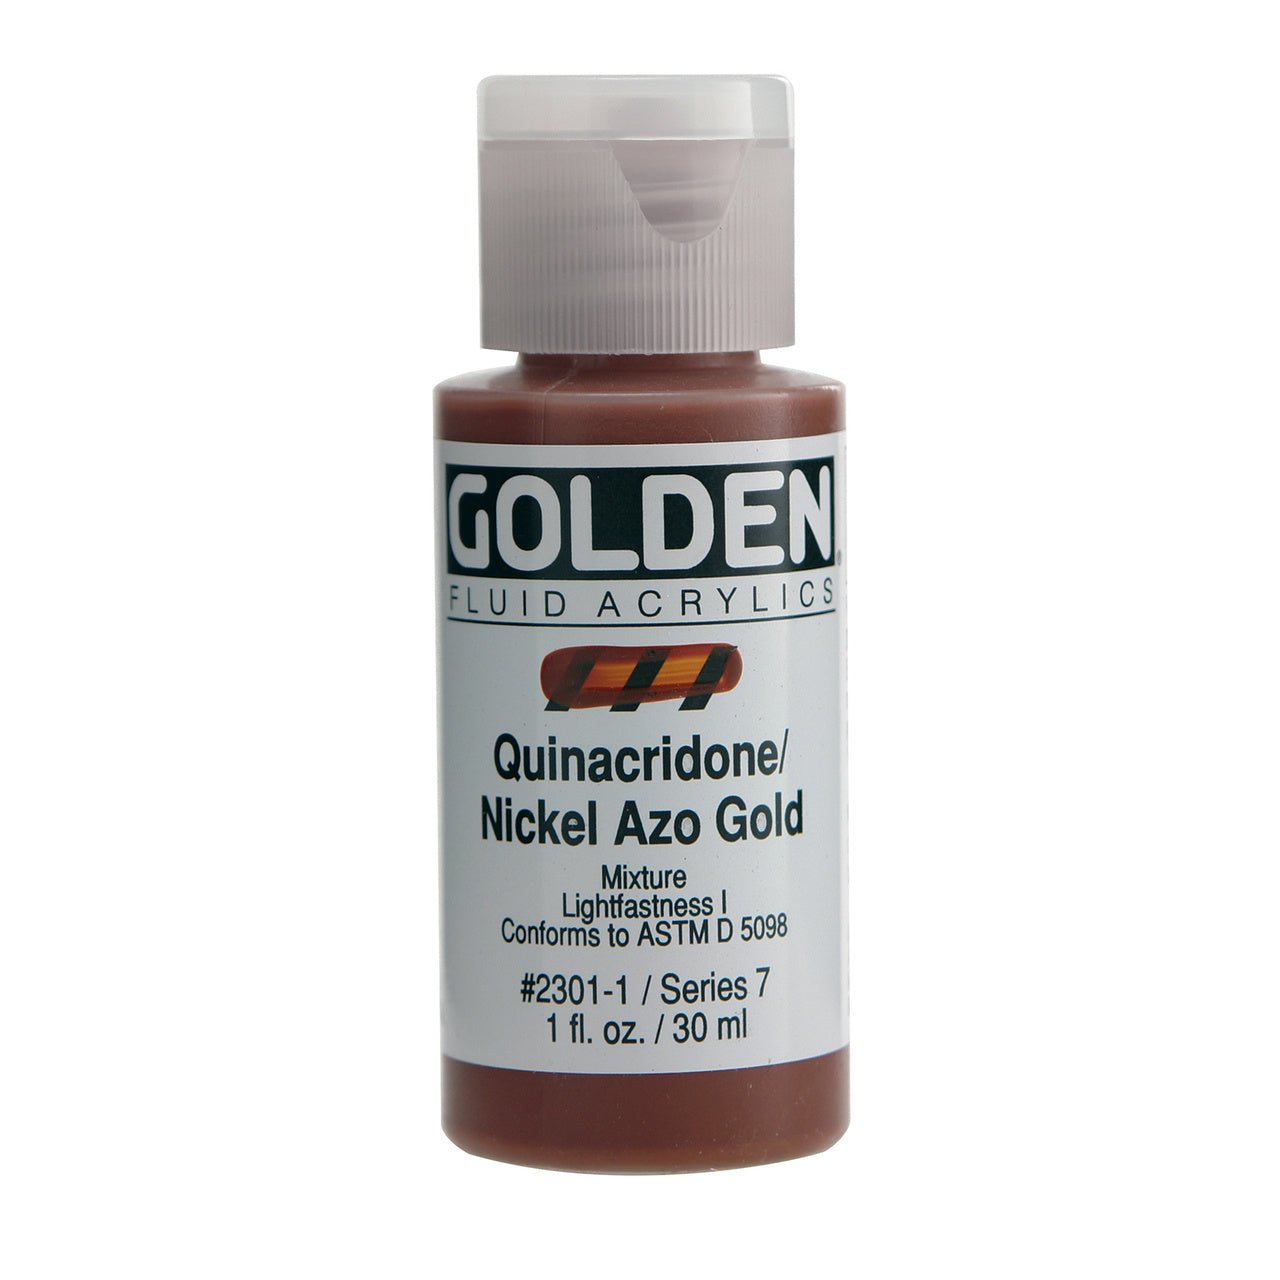 Golden Fluid Acrylic Quinacridone Nickel Azo Gold 1 oz - merriartist.com